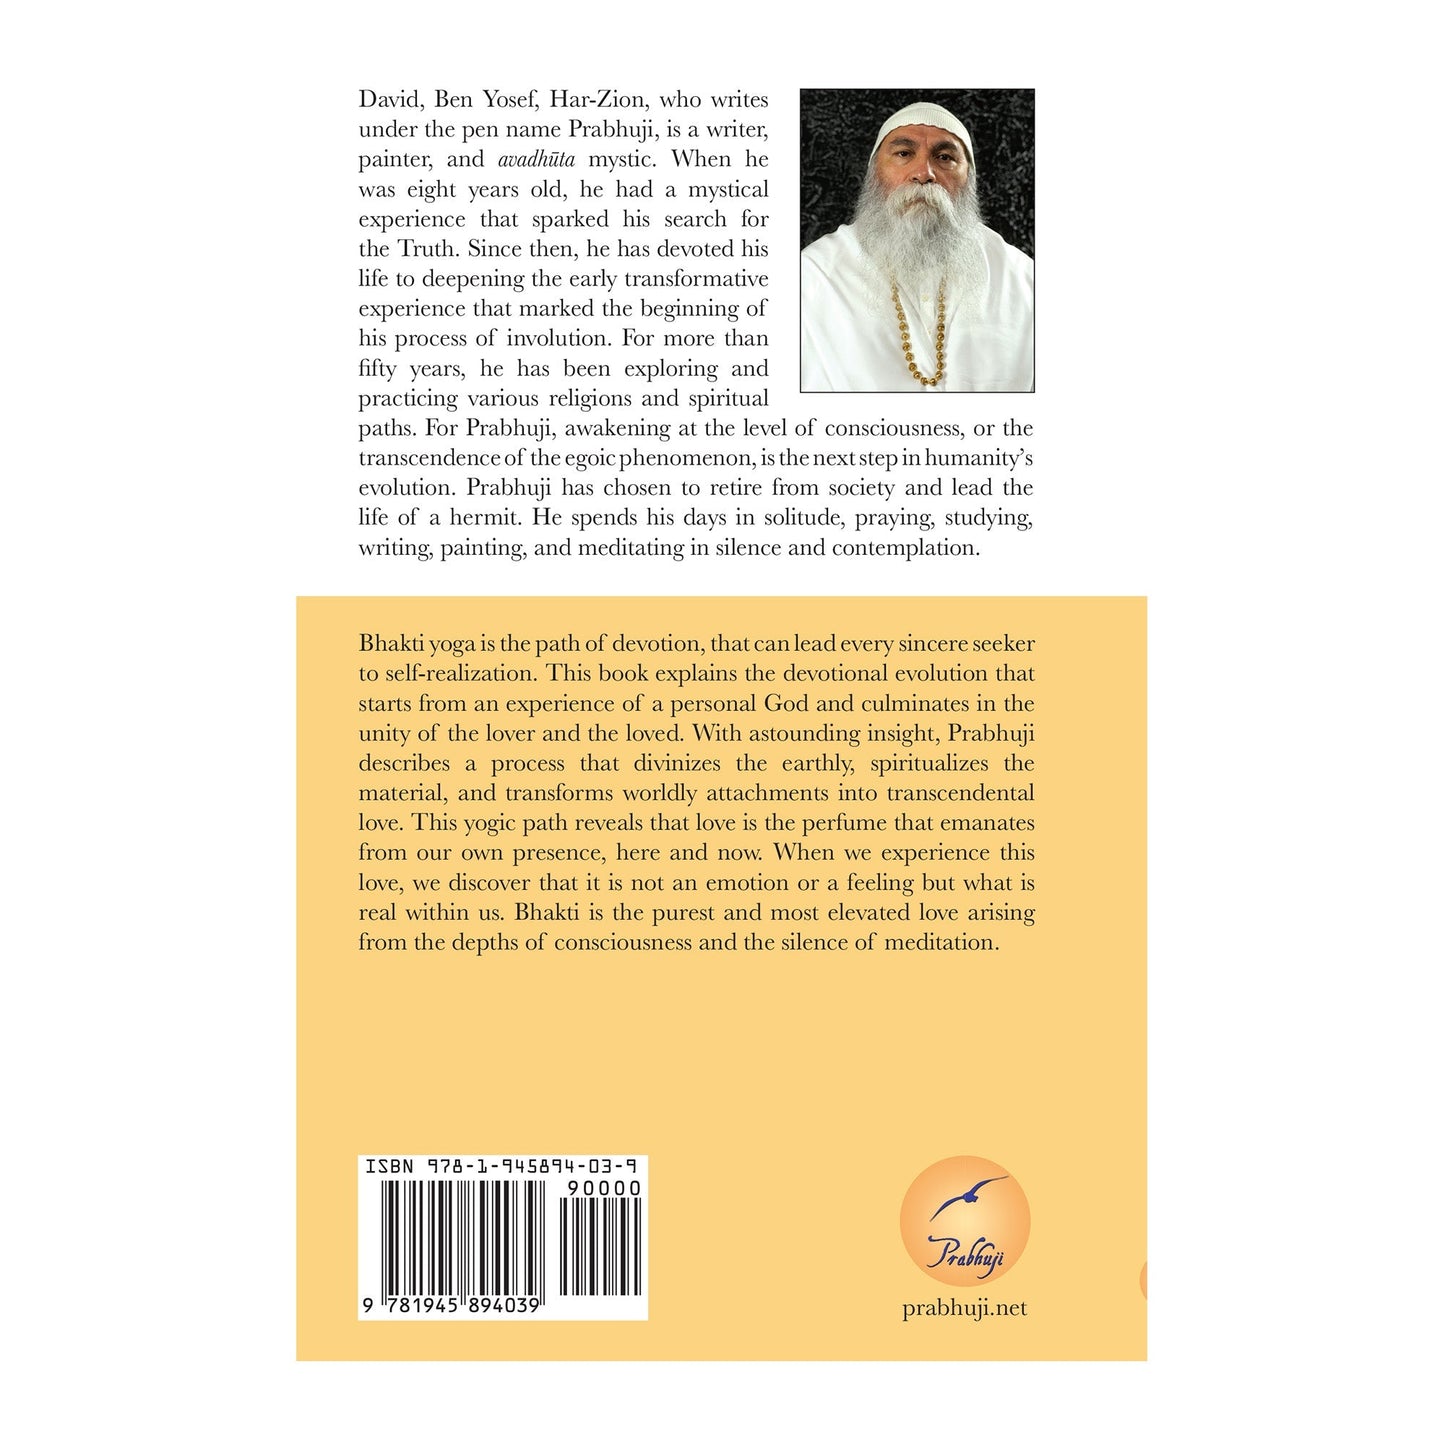 Bhakti yoga - the path of love by Prabhuji (Paperback- English) - Tree Spirit Wellness